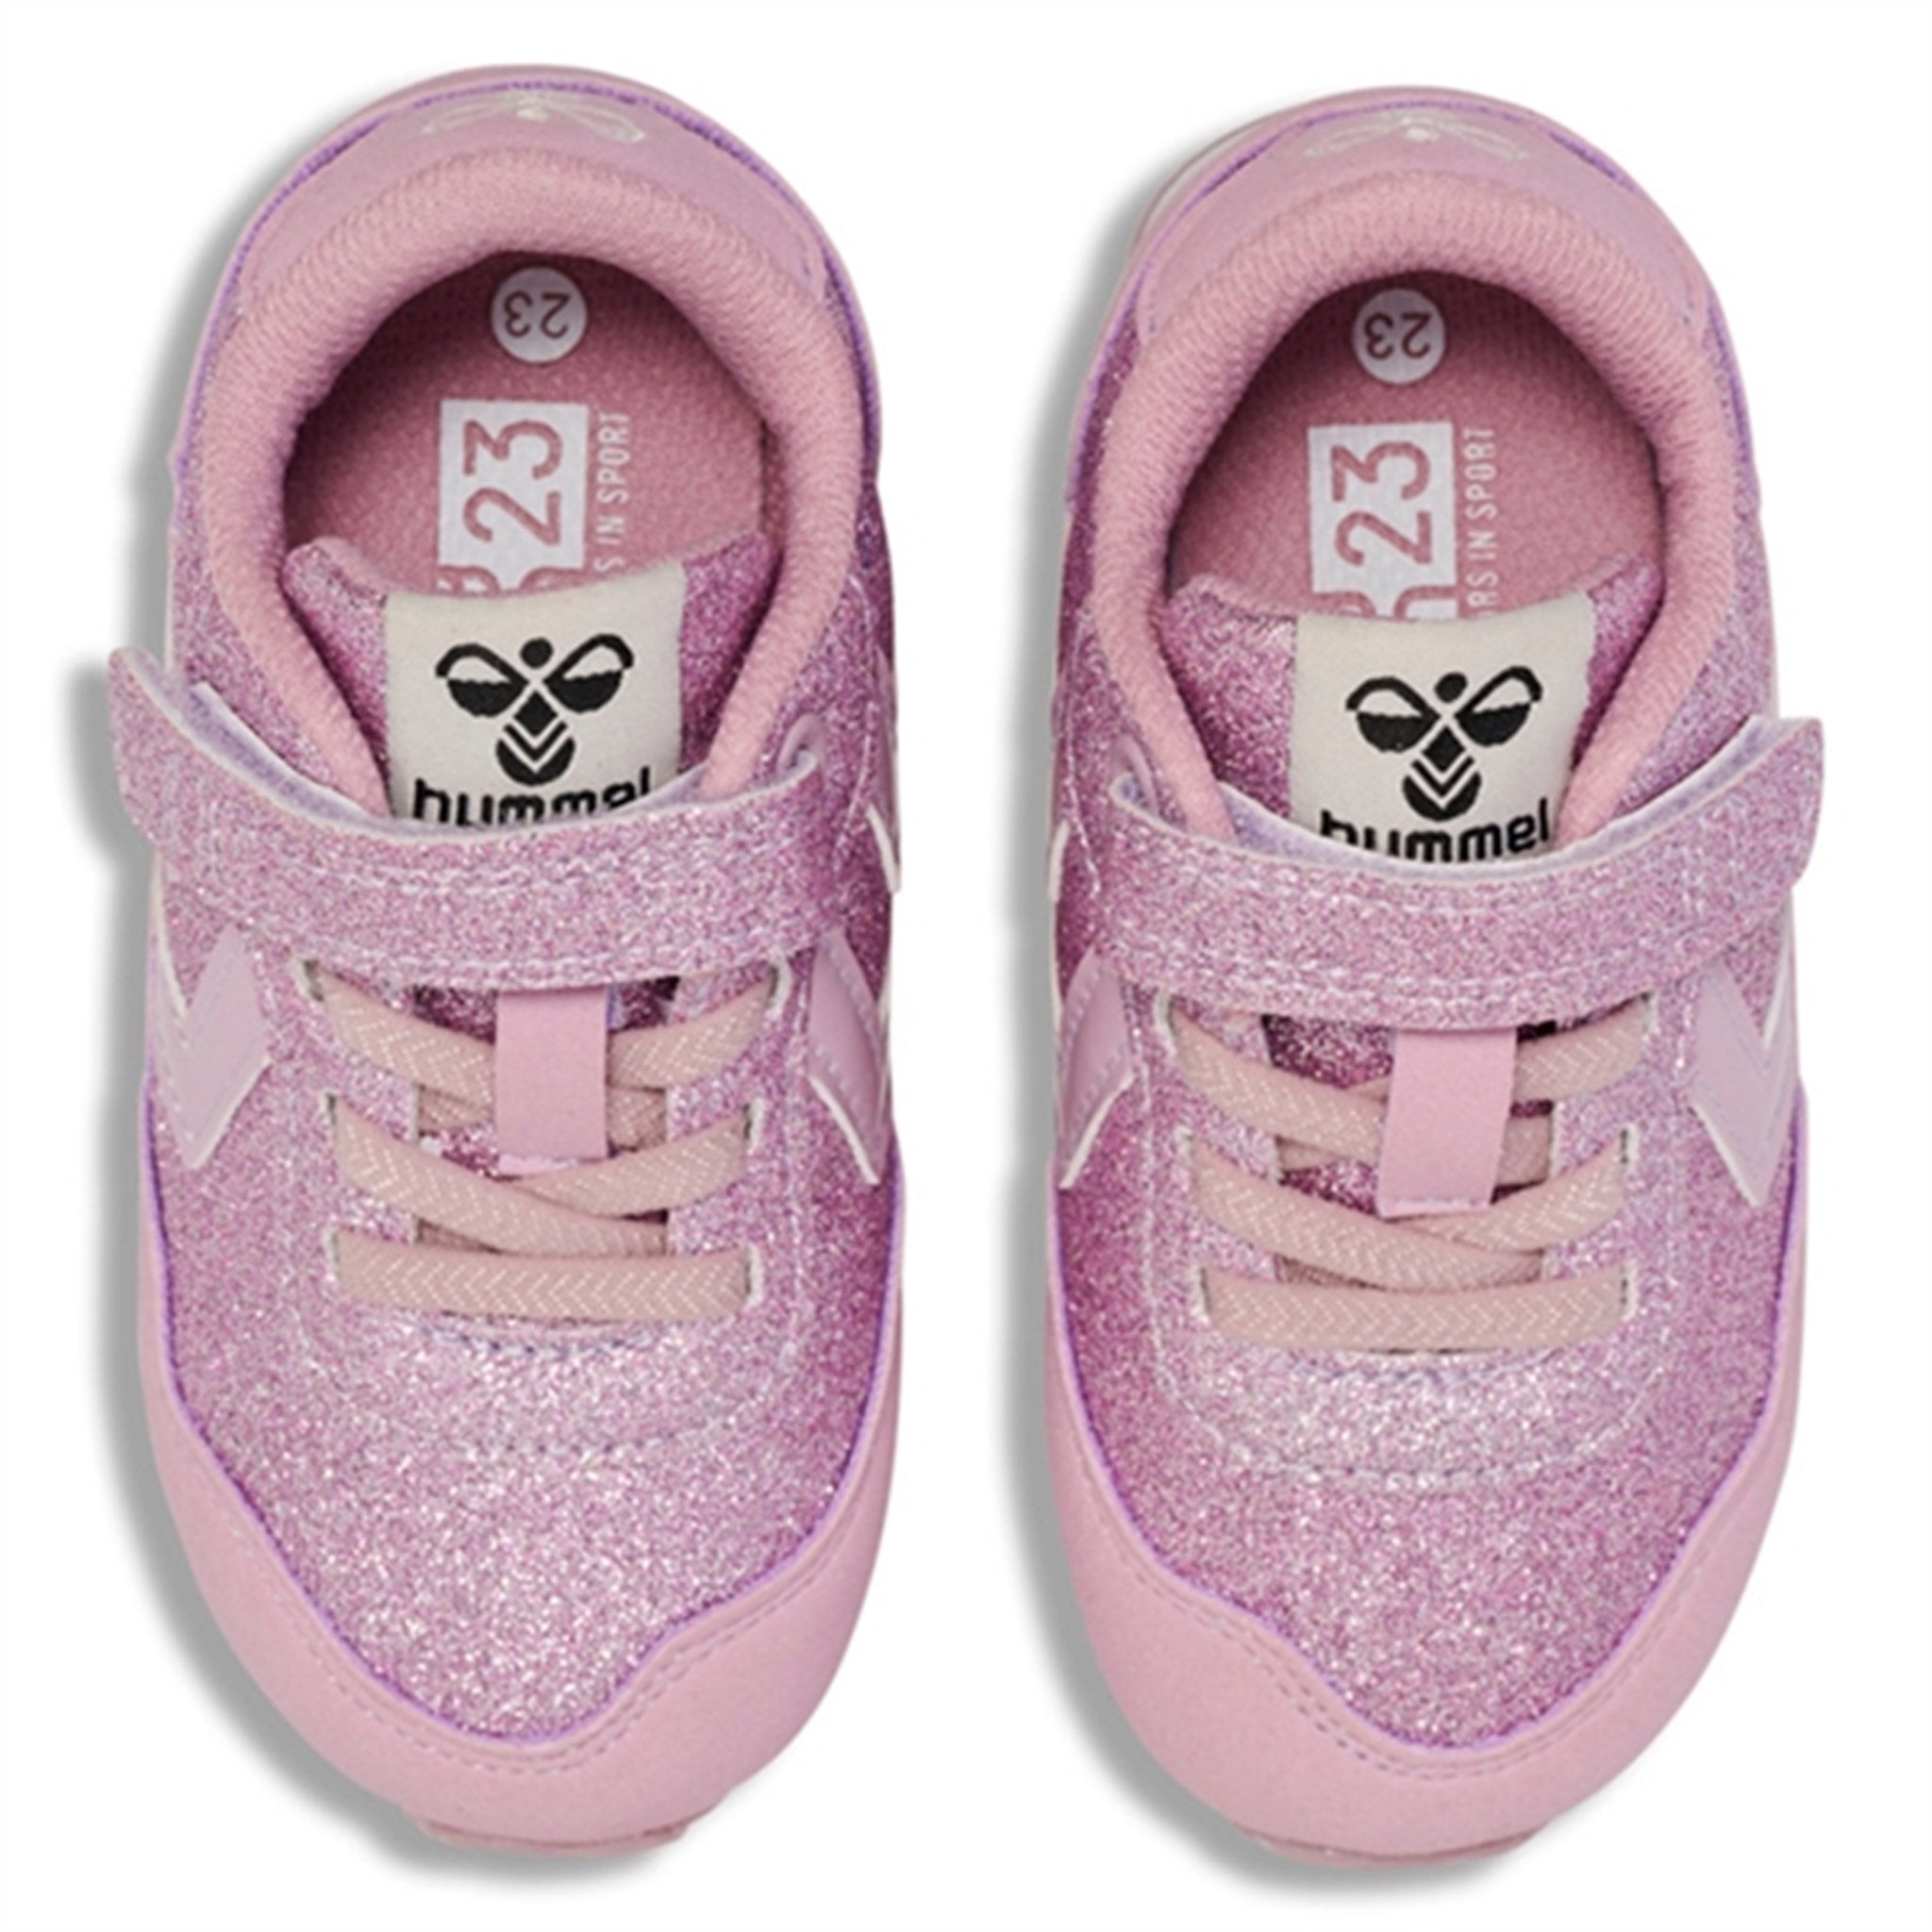 Hummel Reflex Glitter Infant Sneakers Lavender Frost 3